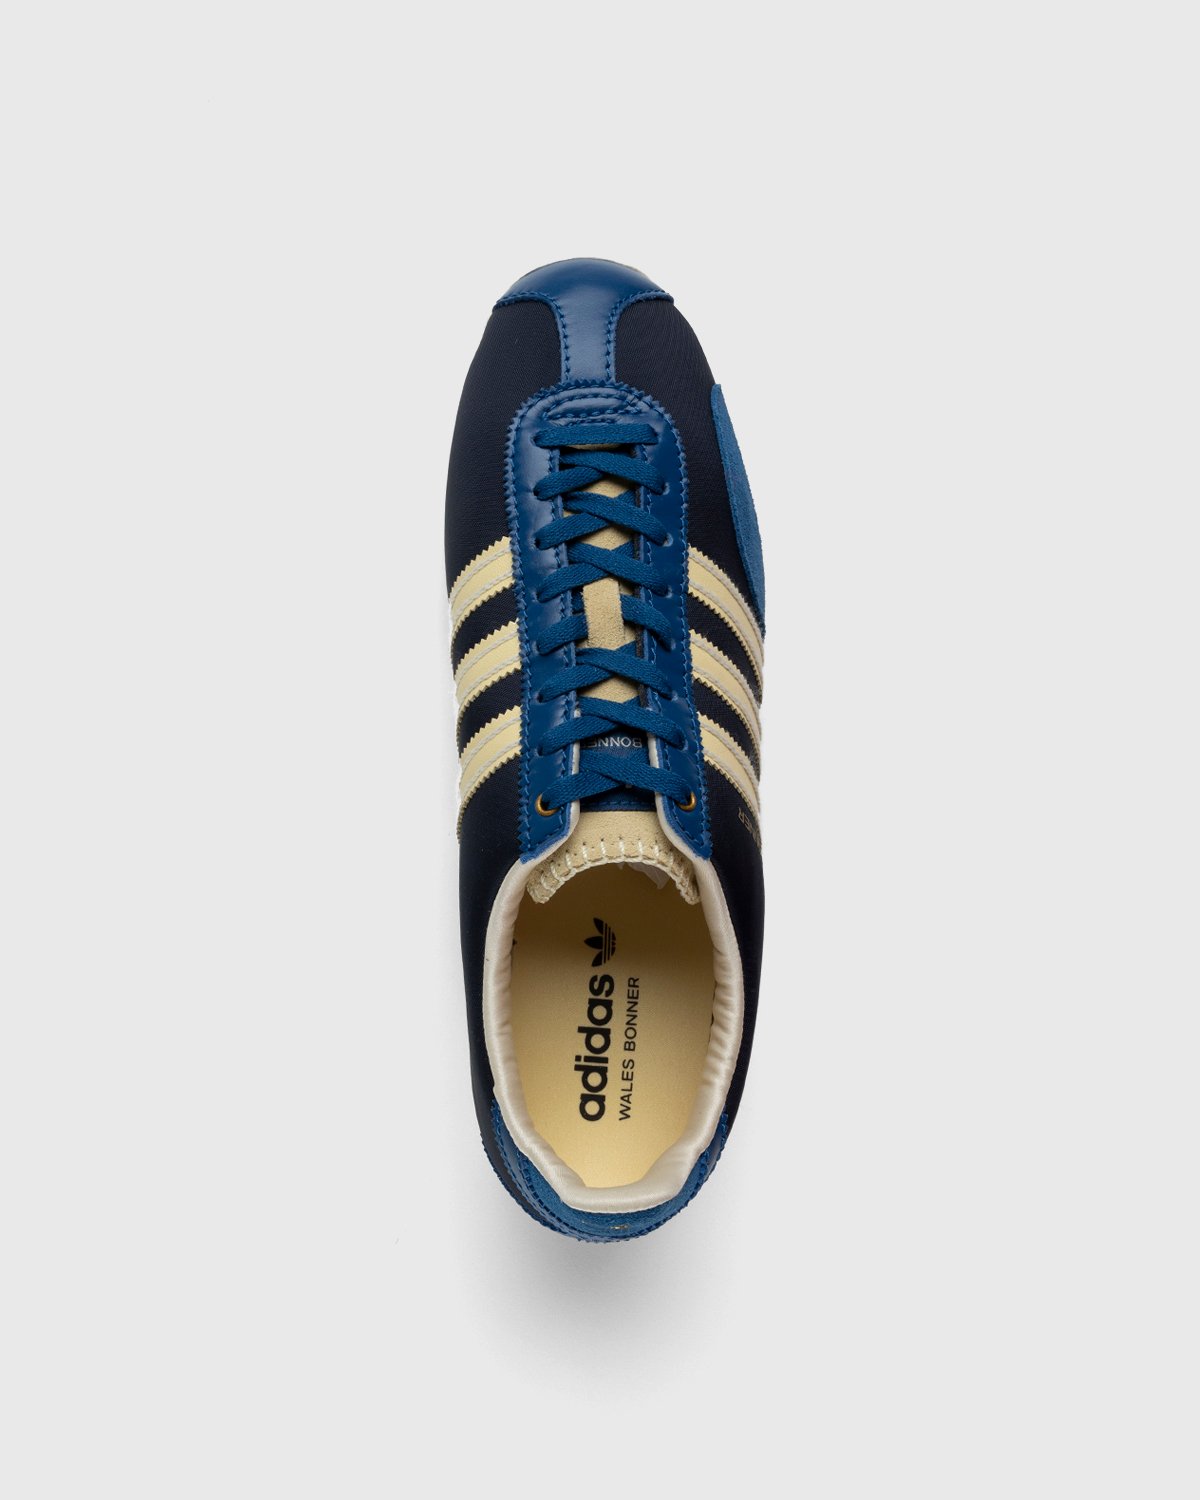 Adidas x Wales Bonner - Japan Legend Ink/Dark Marine/Ecru Tint - Footwear - Blue - Image 5